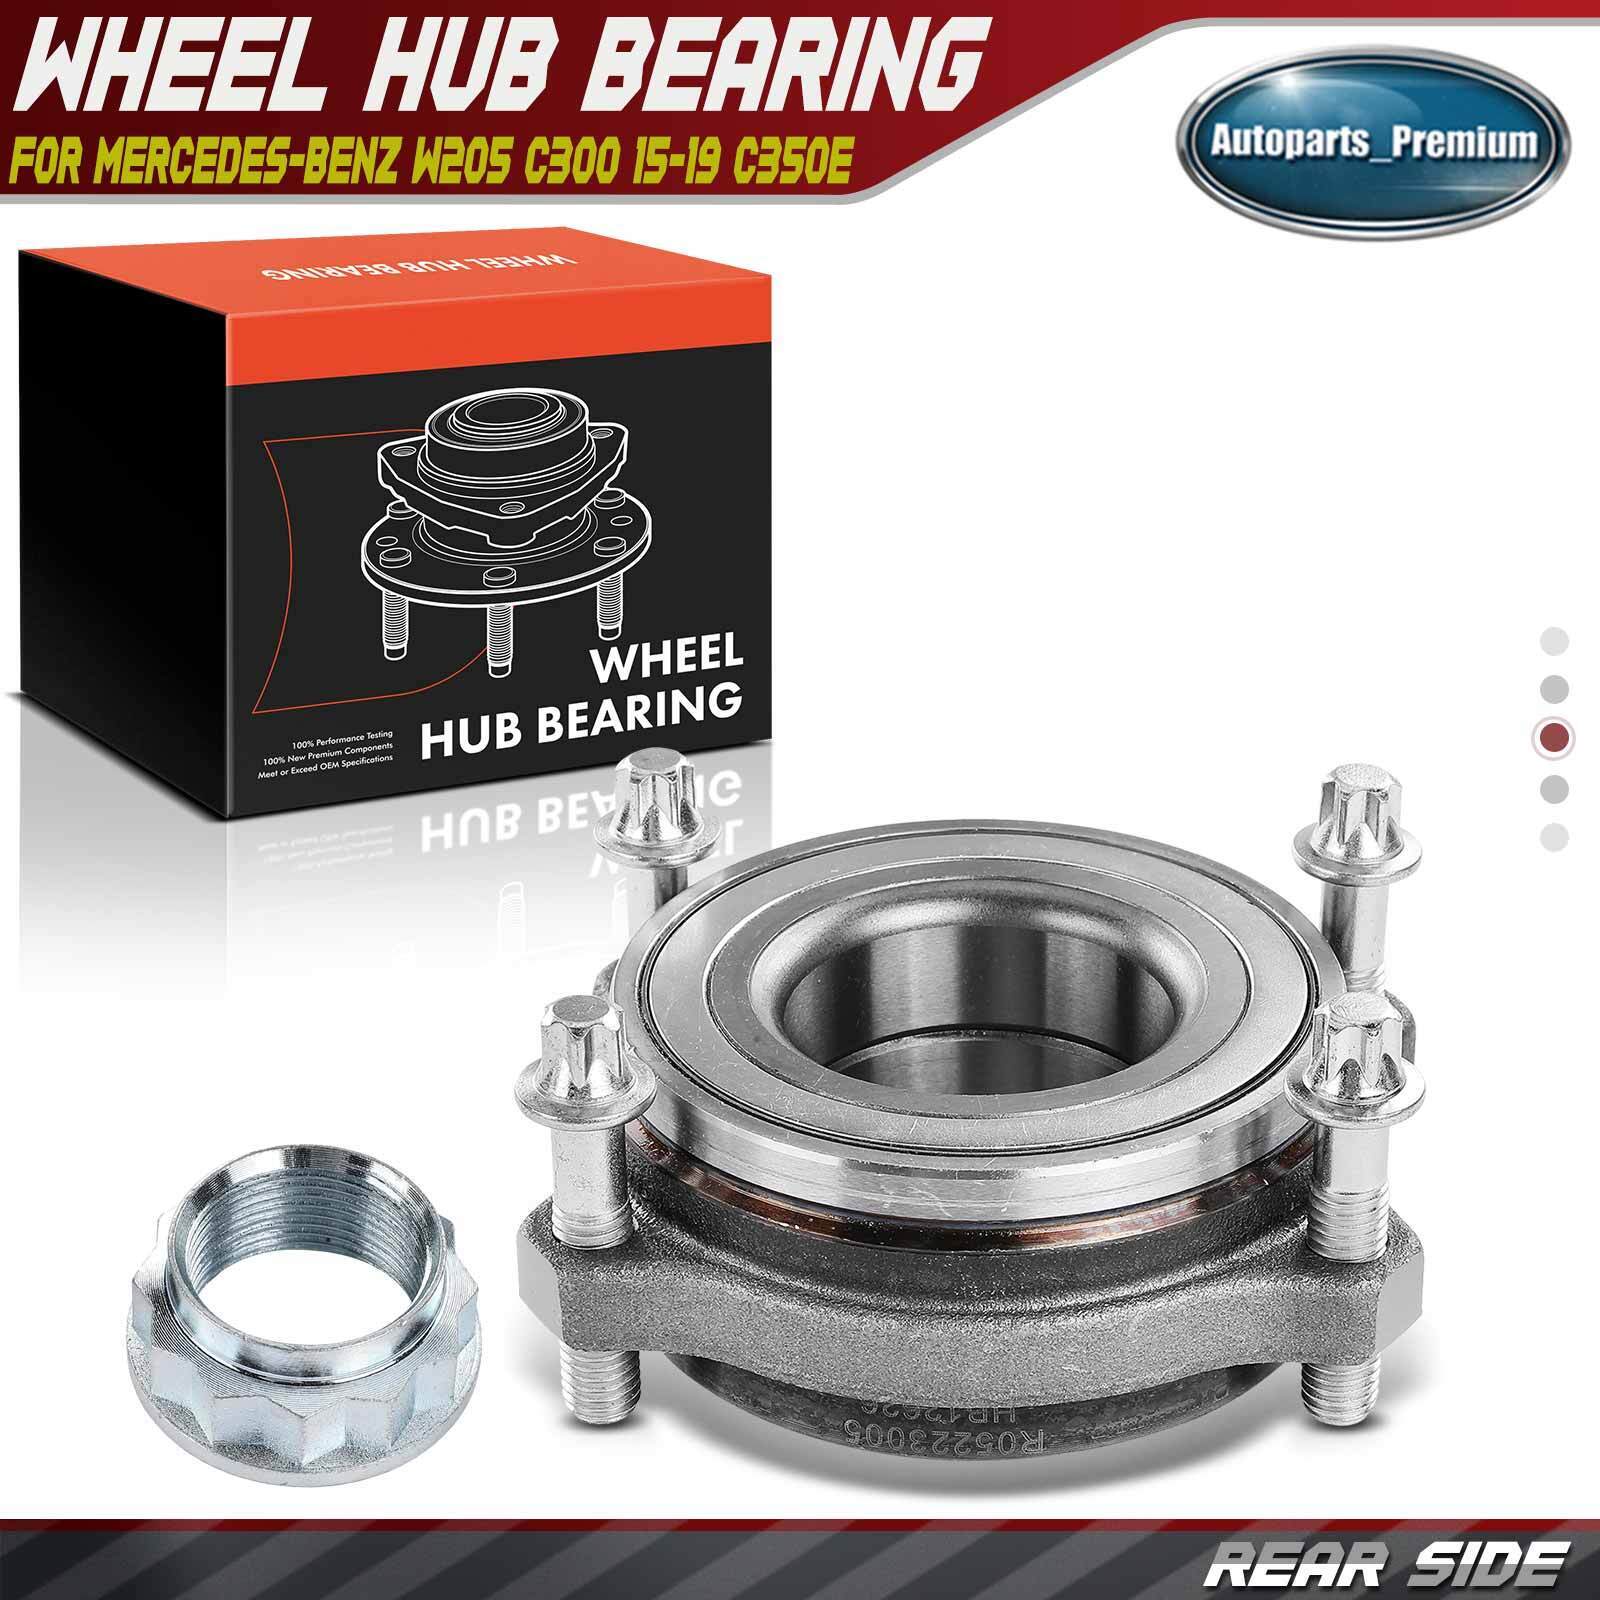 Rear LH / RH Wheel Hub Bearing Assembly for Mercedes-Benz W205 C300 15-19 C350E